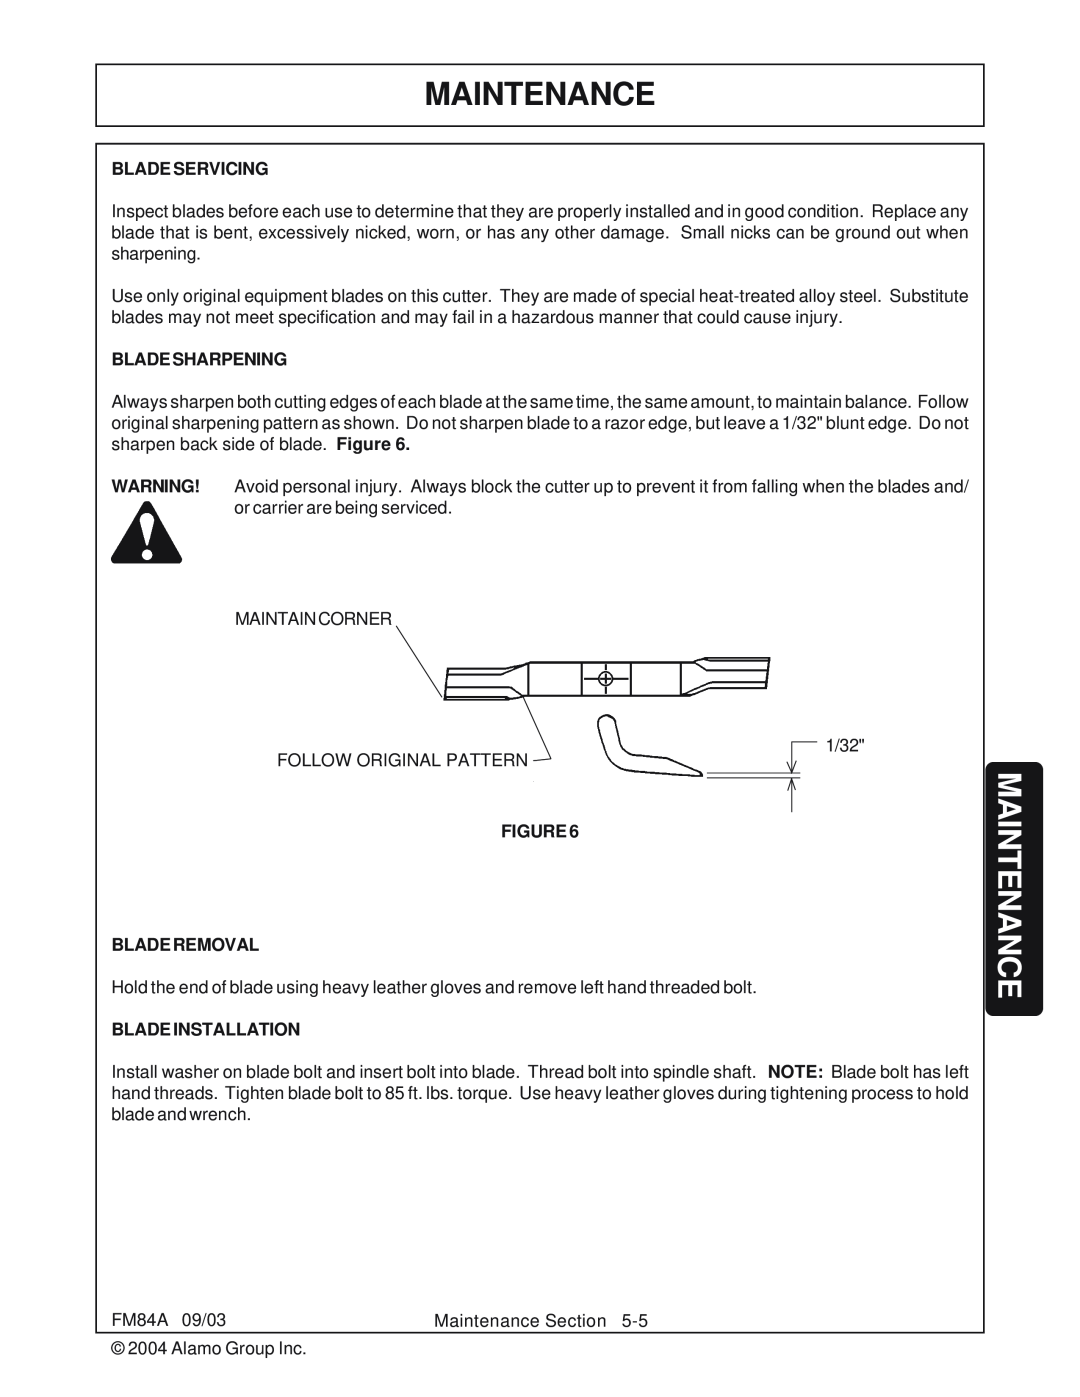 Servis-Rhino FM84A manual Maintenance, Blade Servicing, Bladesharpening, Figure Bladeremoval, Blade Installation 